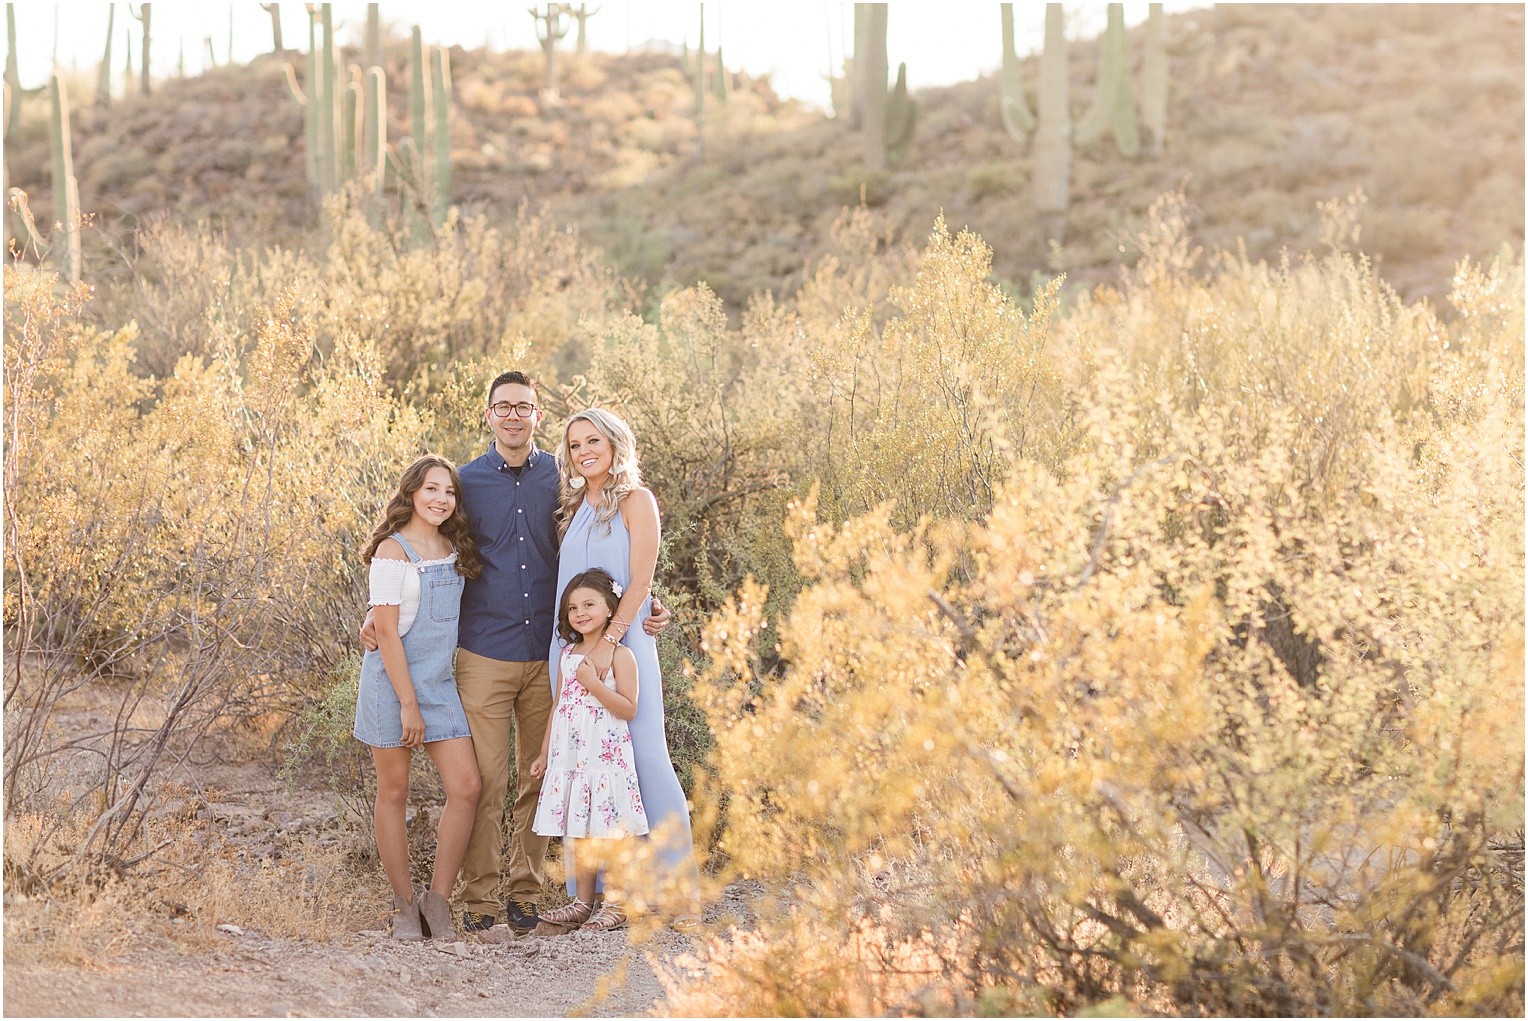 Joyful and Candid Family Photos in Tucson, AZ Emily & Mario